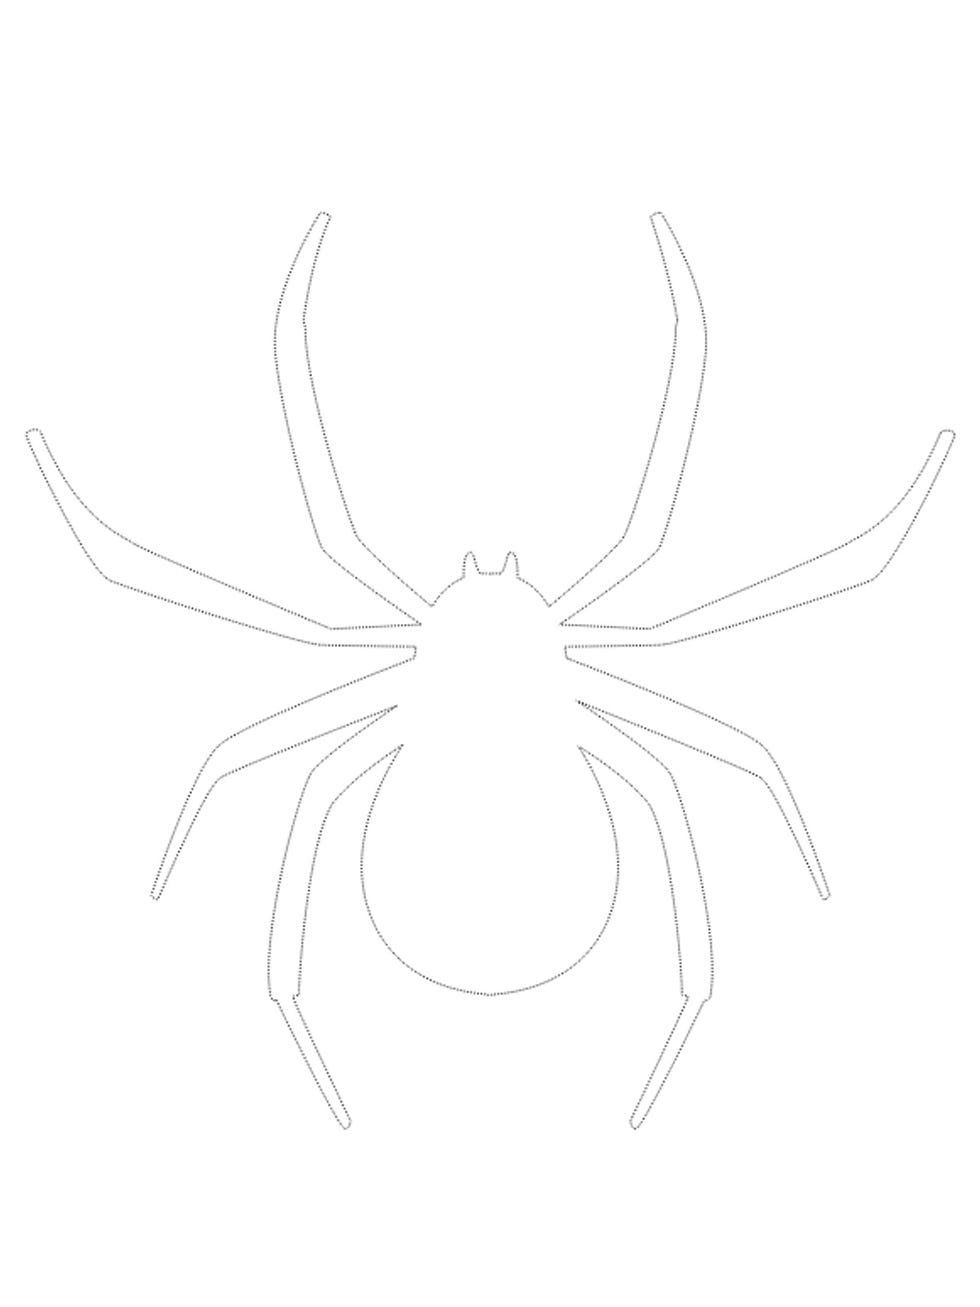 White, Line, Invertebrate, Symmetry, Line art, Orb-weaver spider, Insect, Black-and-white, Spider, Arachnid, 